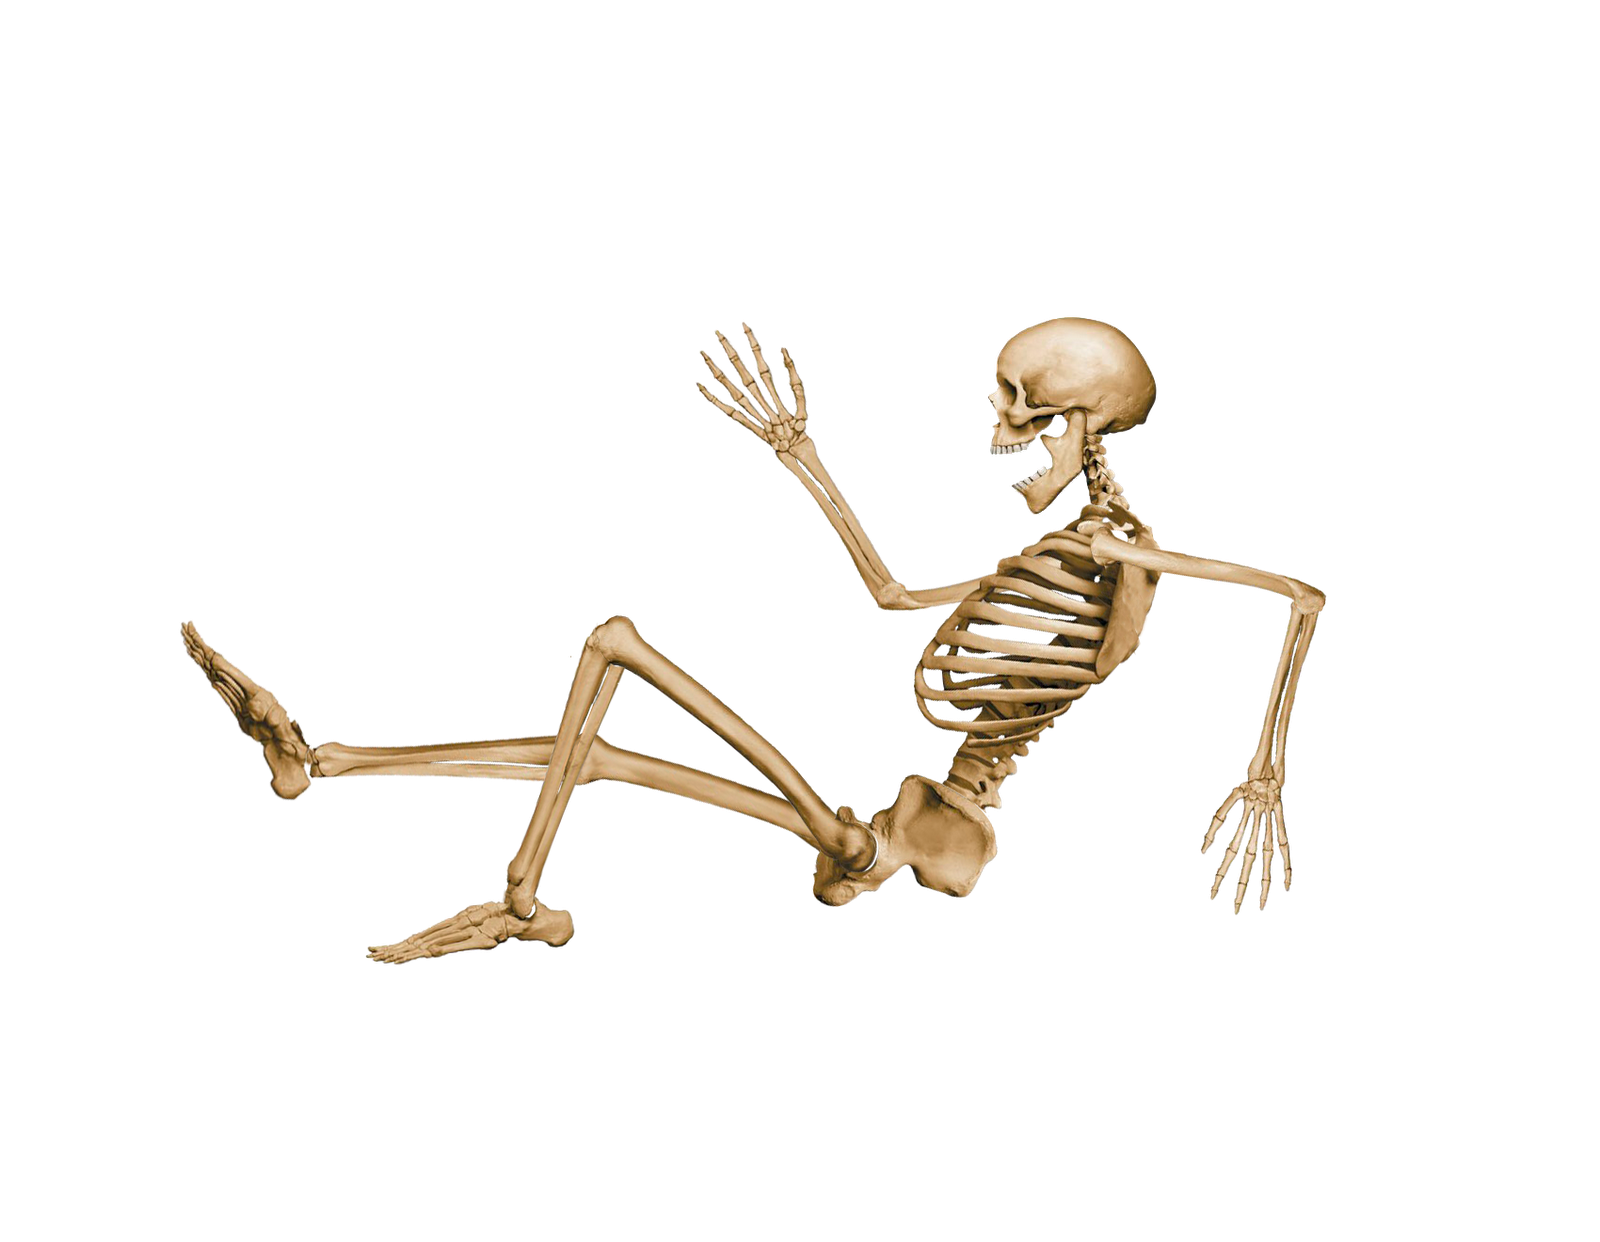 Skeleton Sitting PNG Images Transparent Background | PNG Play